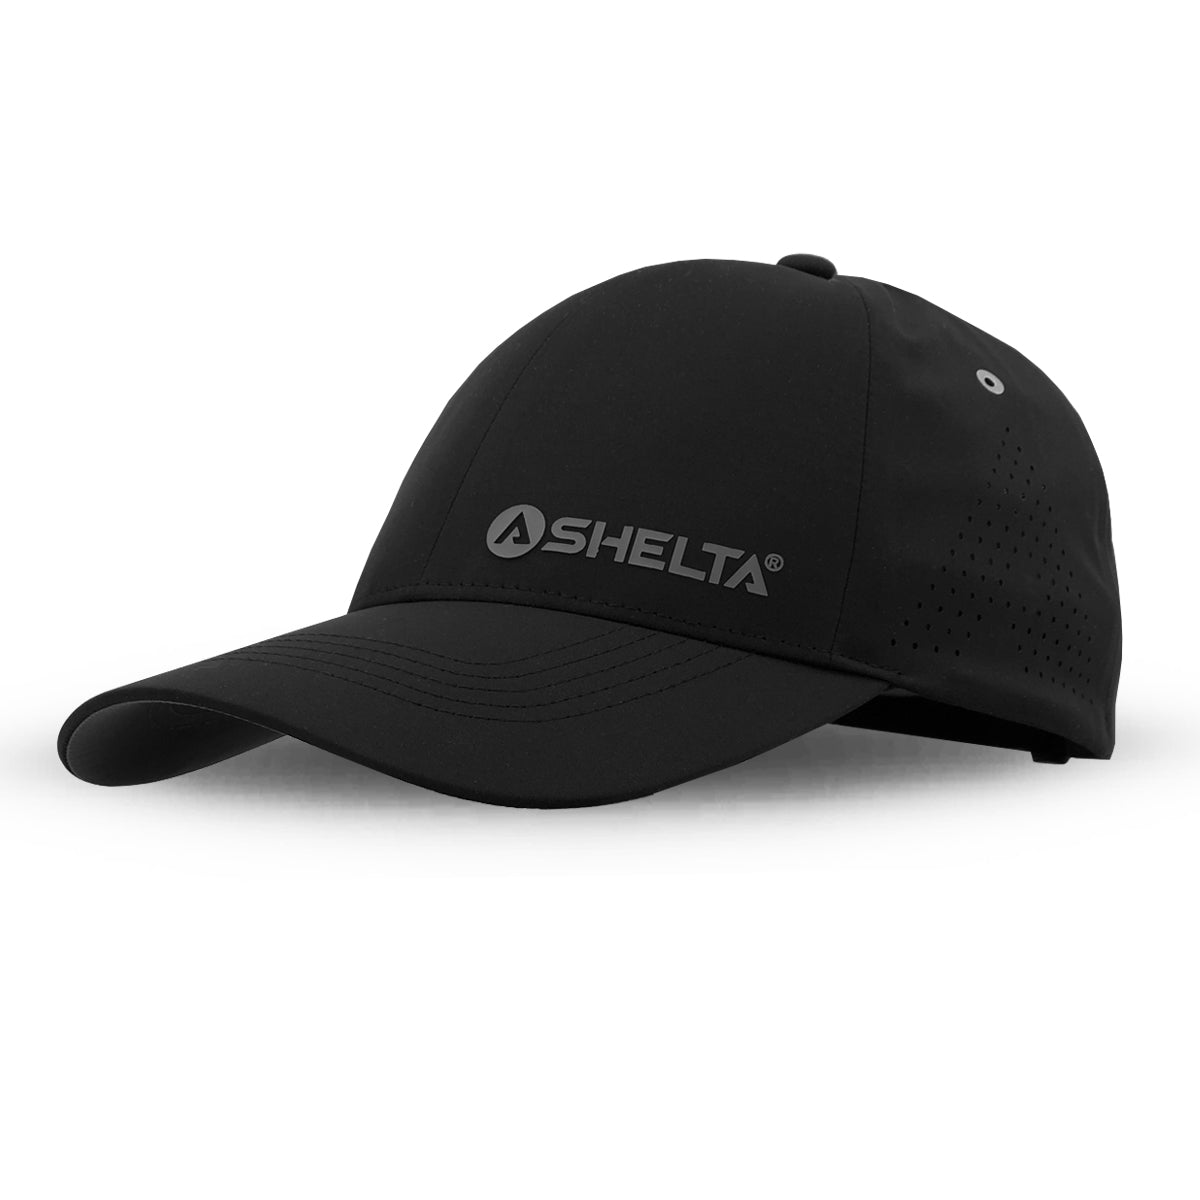 The Shelta V2 Tech Cap in Stealth Black